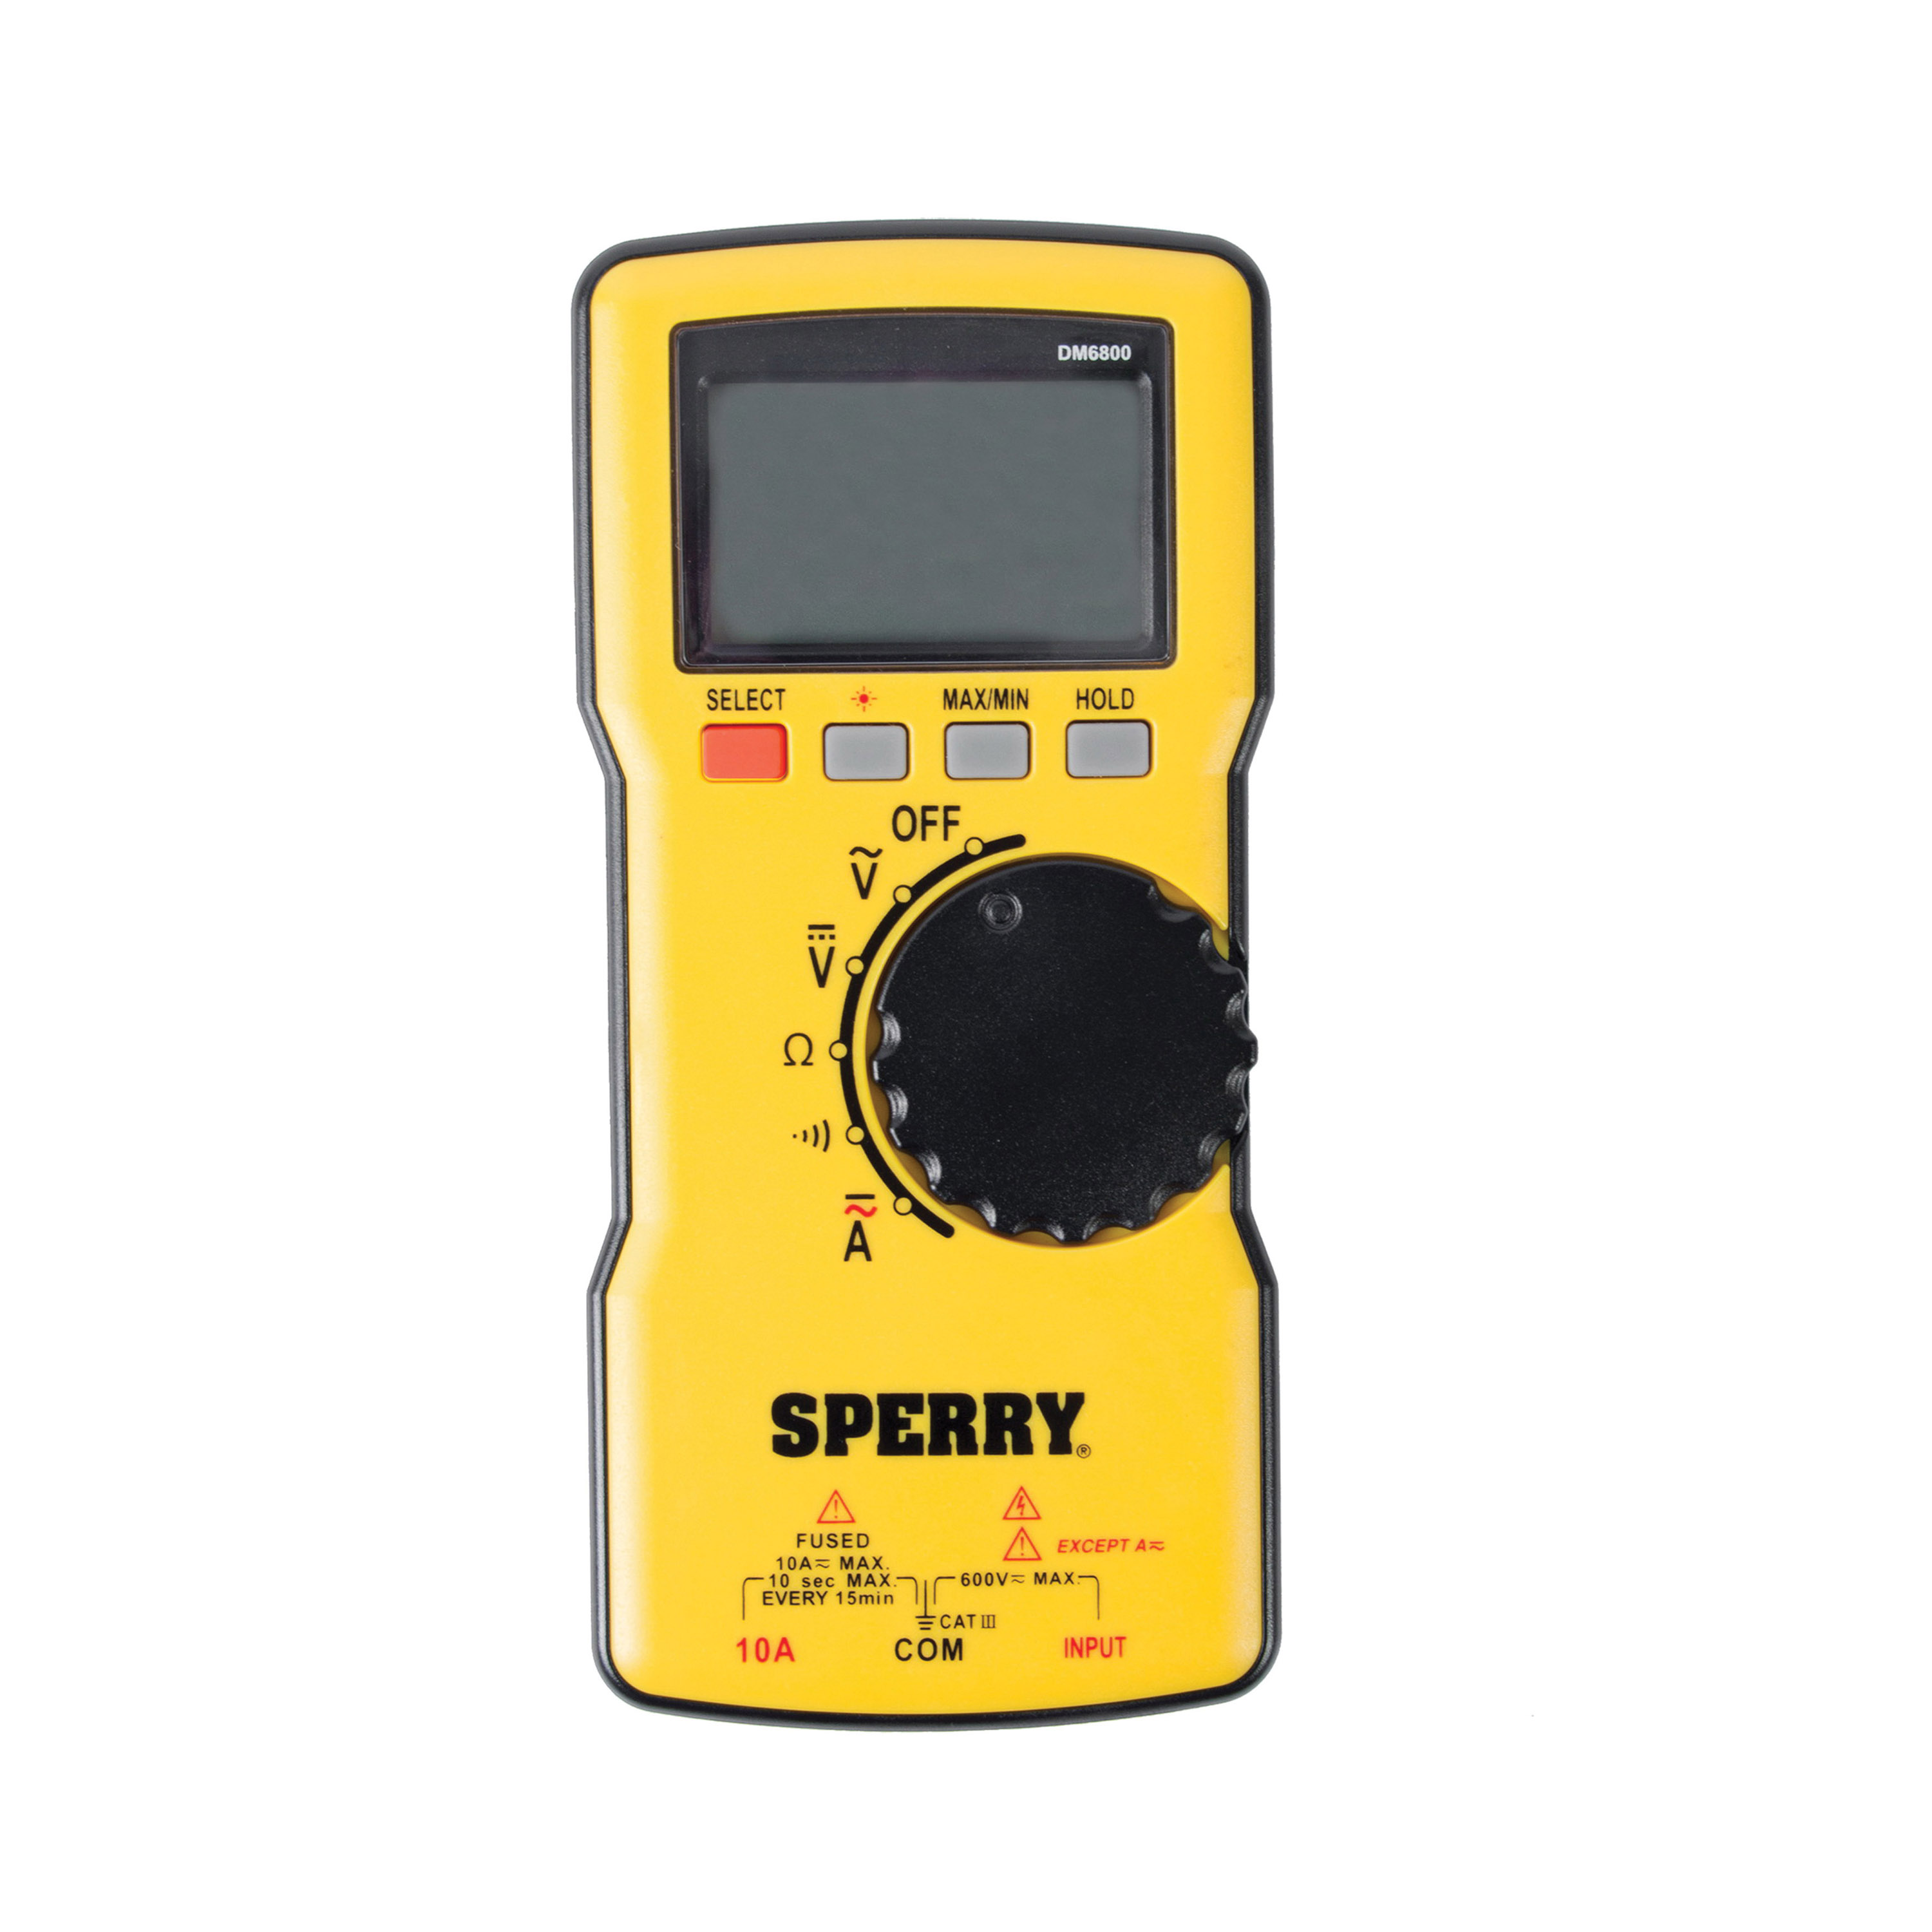 Sperry Instruments DM6800